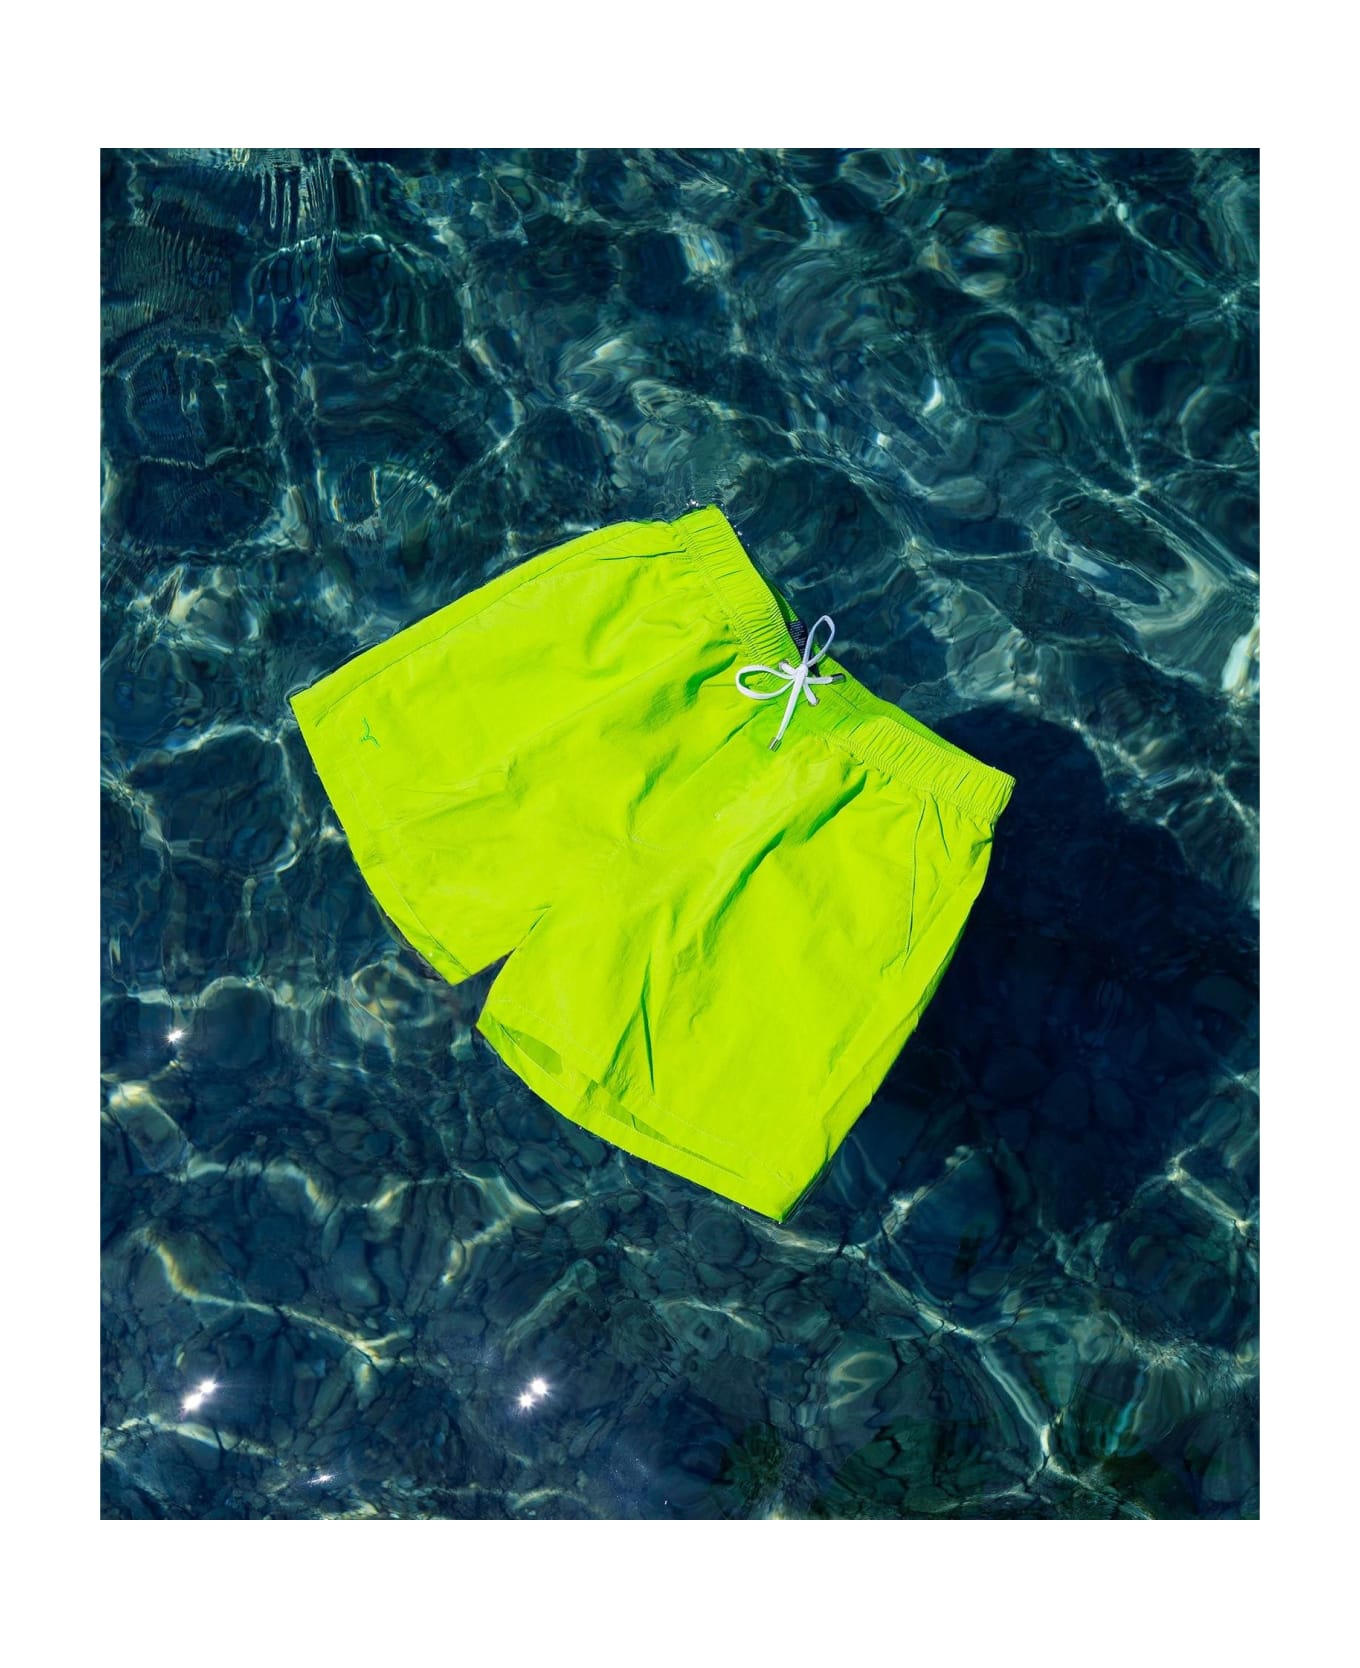 Larusmiani Swim Suit 'cala Di Volpe' Swimming Trunks - Green